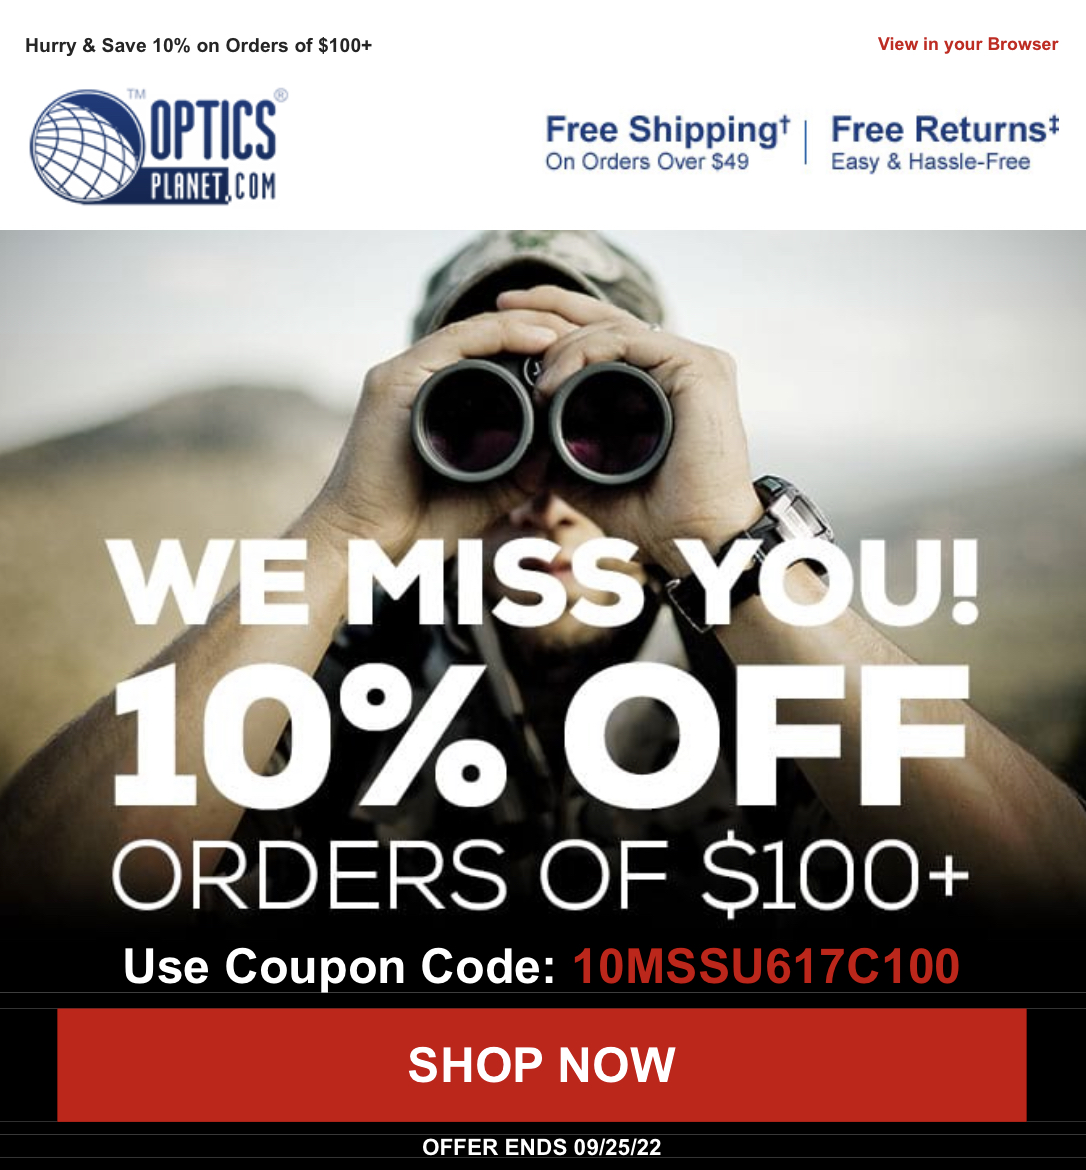 Optics Coupon Code Spend 100+ & Save 10. Expires 09/25/22